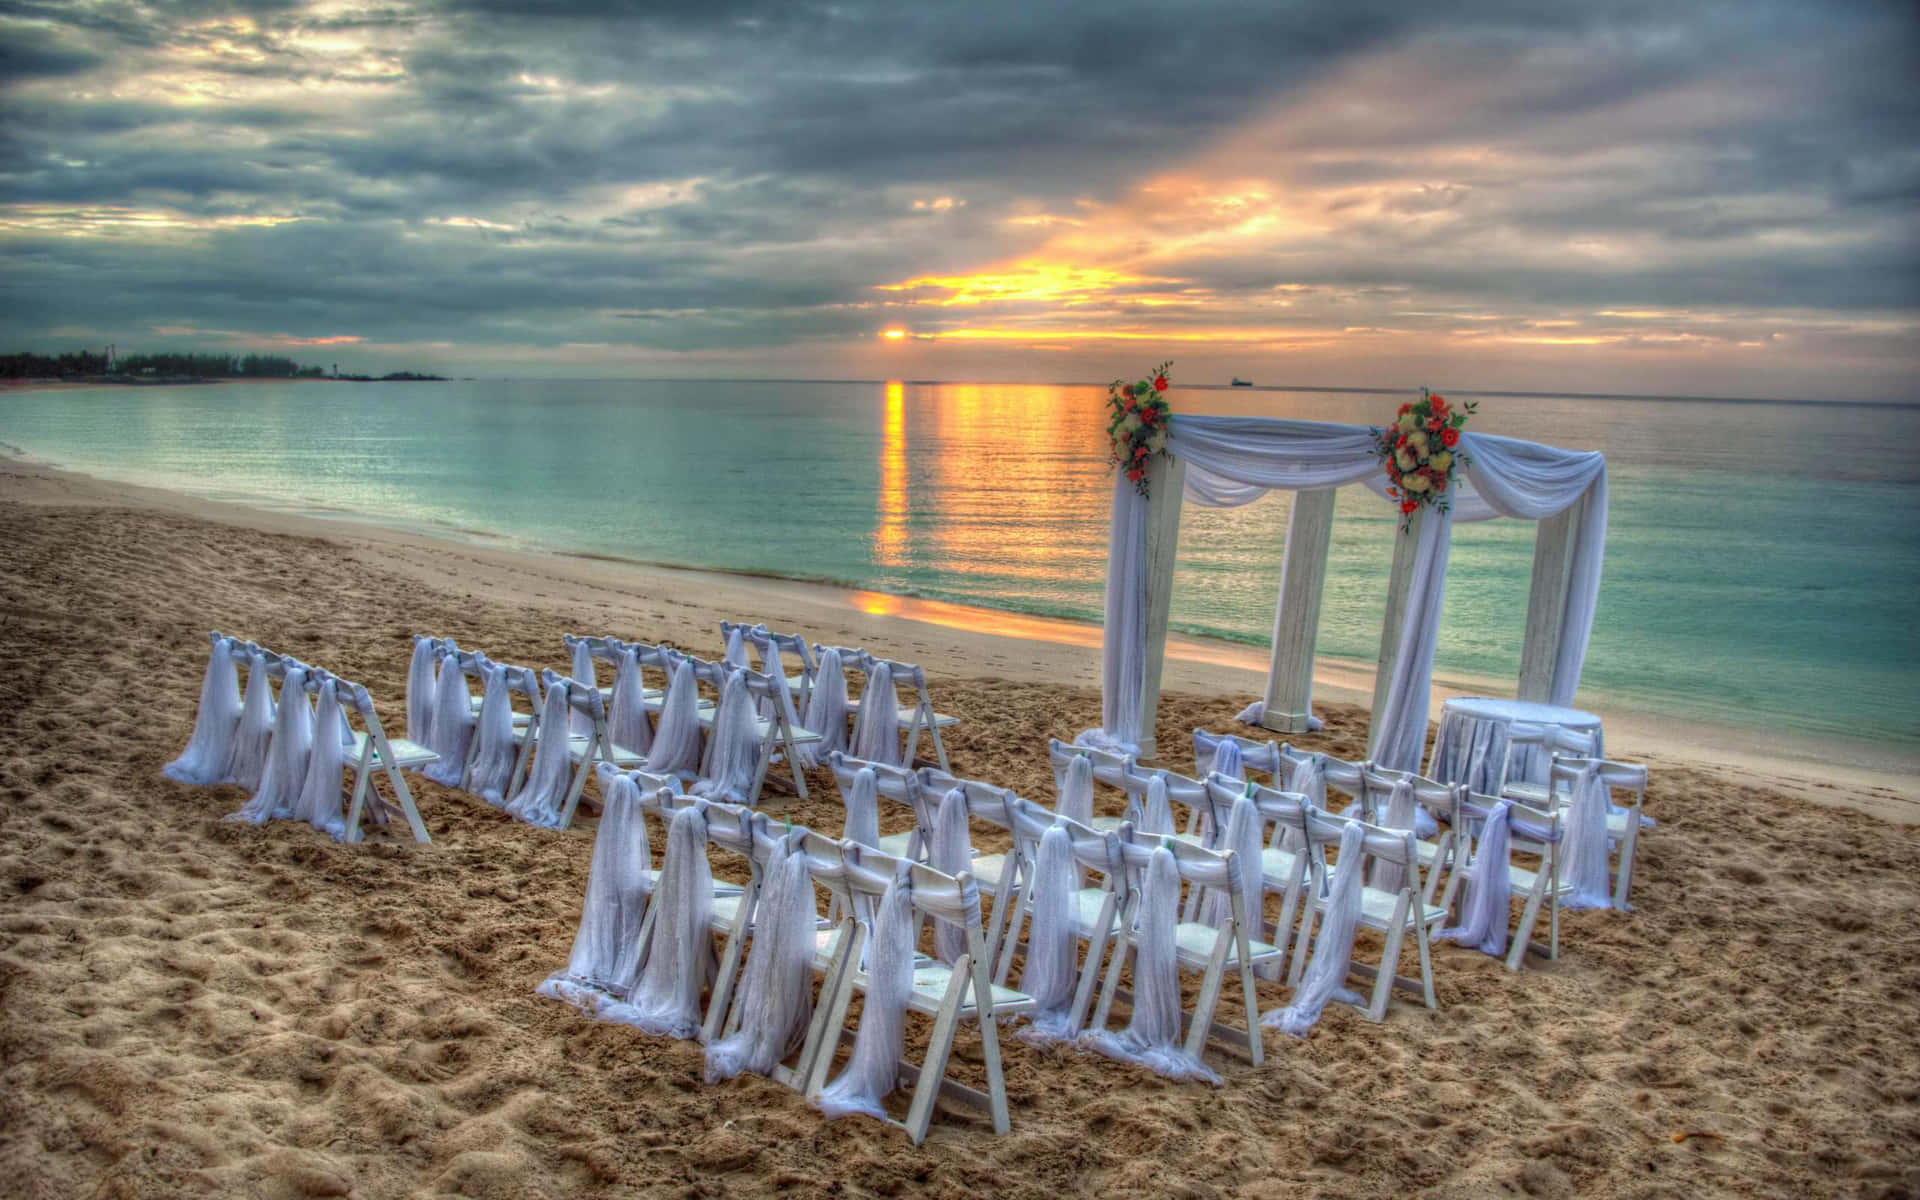 A beautiful beach wedding ceremony at sunset